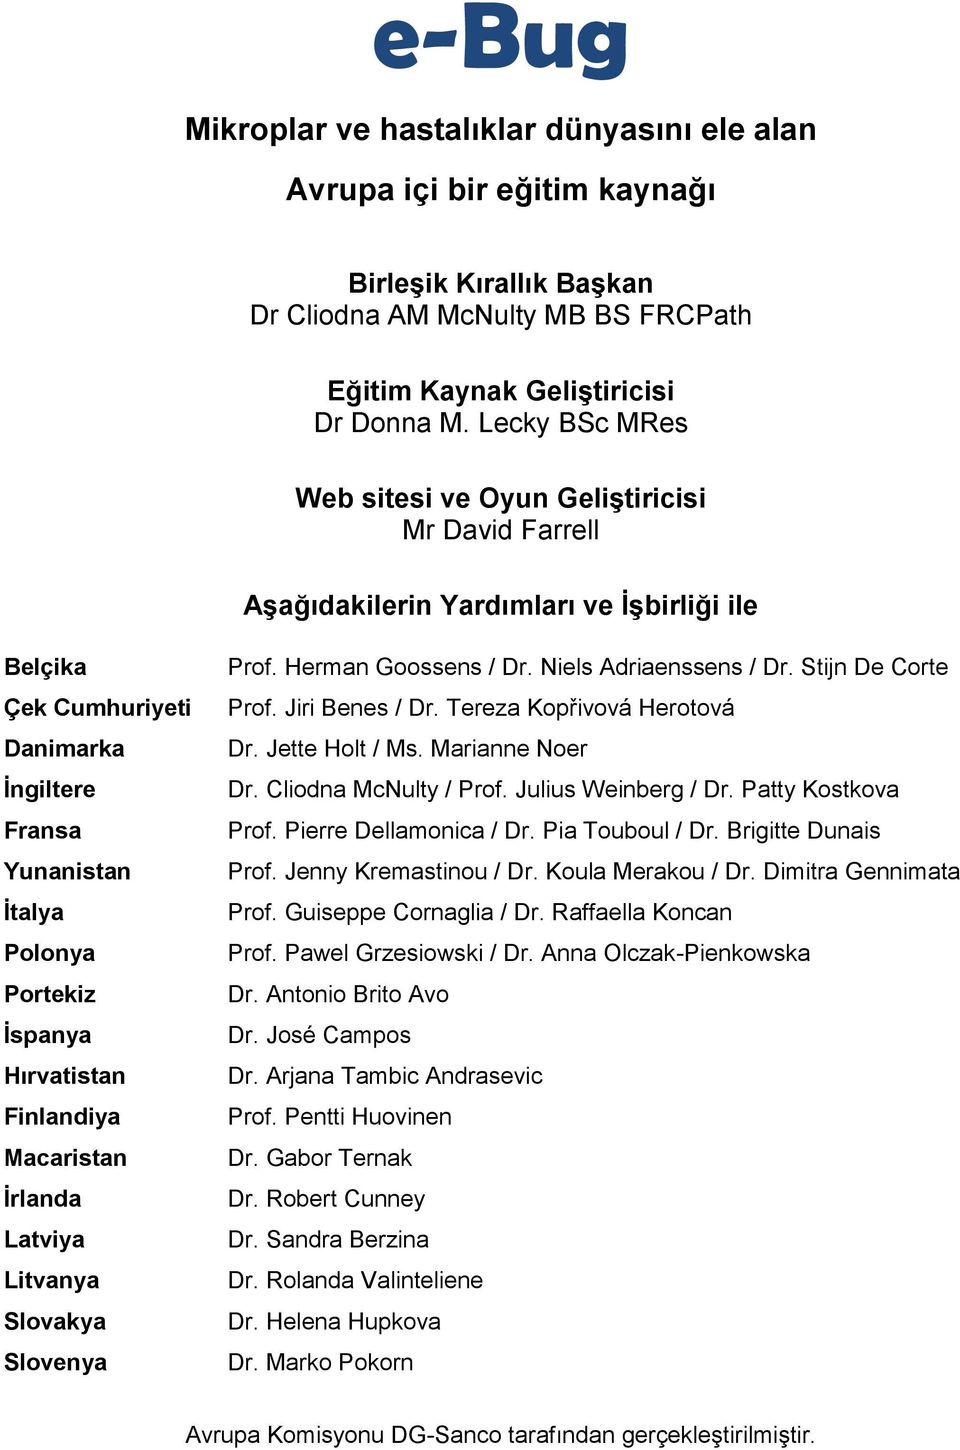 İspanya Hırvatistan Finlandiya Macaristan İrlanda Latviya Litvanya Slovakya Slovenya Prof. Herman Goossens / Dr. Niels Adriaenssens / Dr. Stijn De Corte Prof. Jiri Benes / Dr.